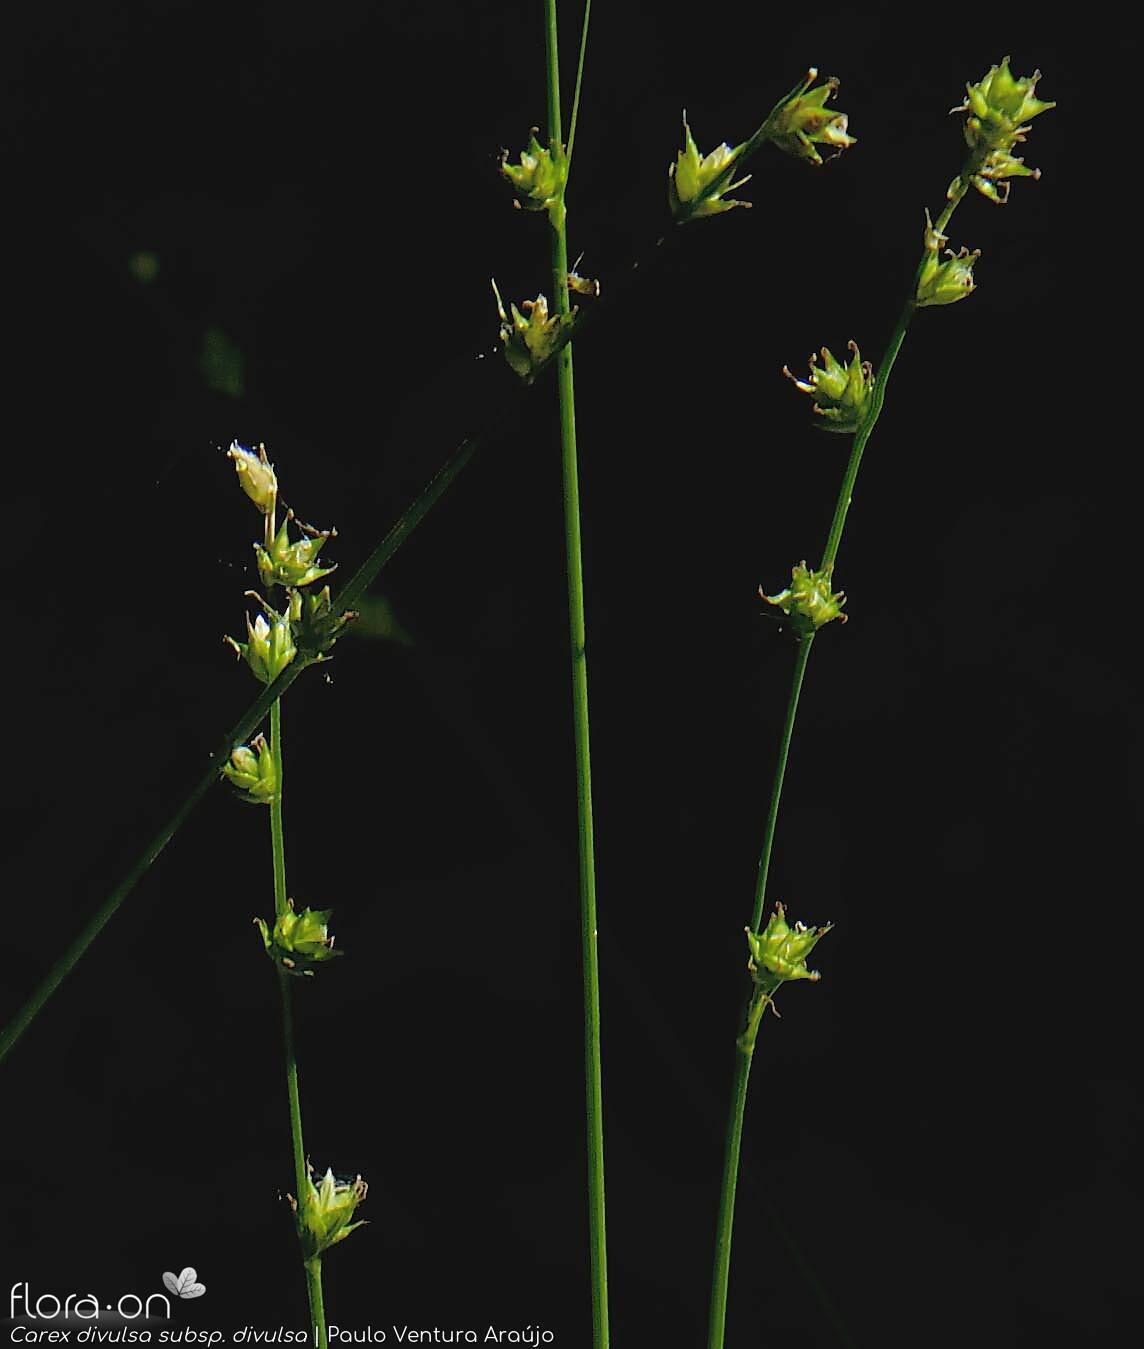 Carex divulsa divulsa - Flor (geral) | Paulo Ventura Araújo; CC BY-NC 4.0